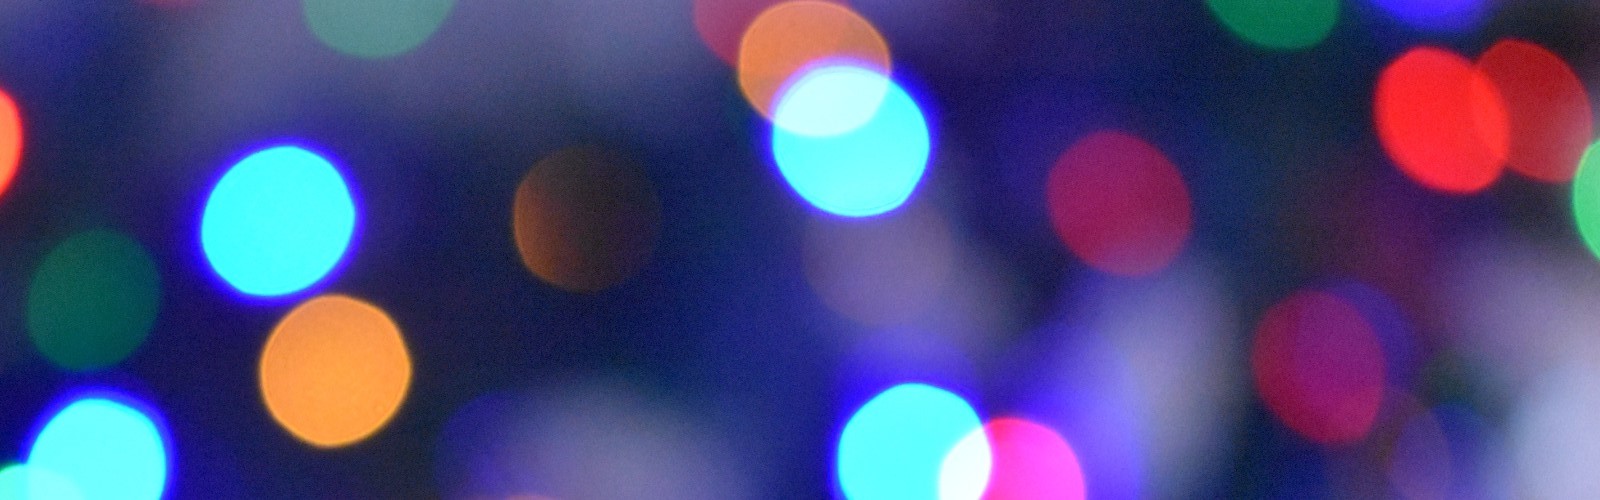 Close up of multi-coloured festive lights